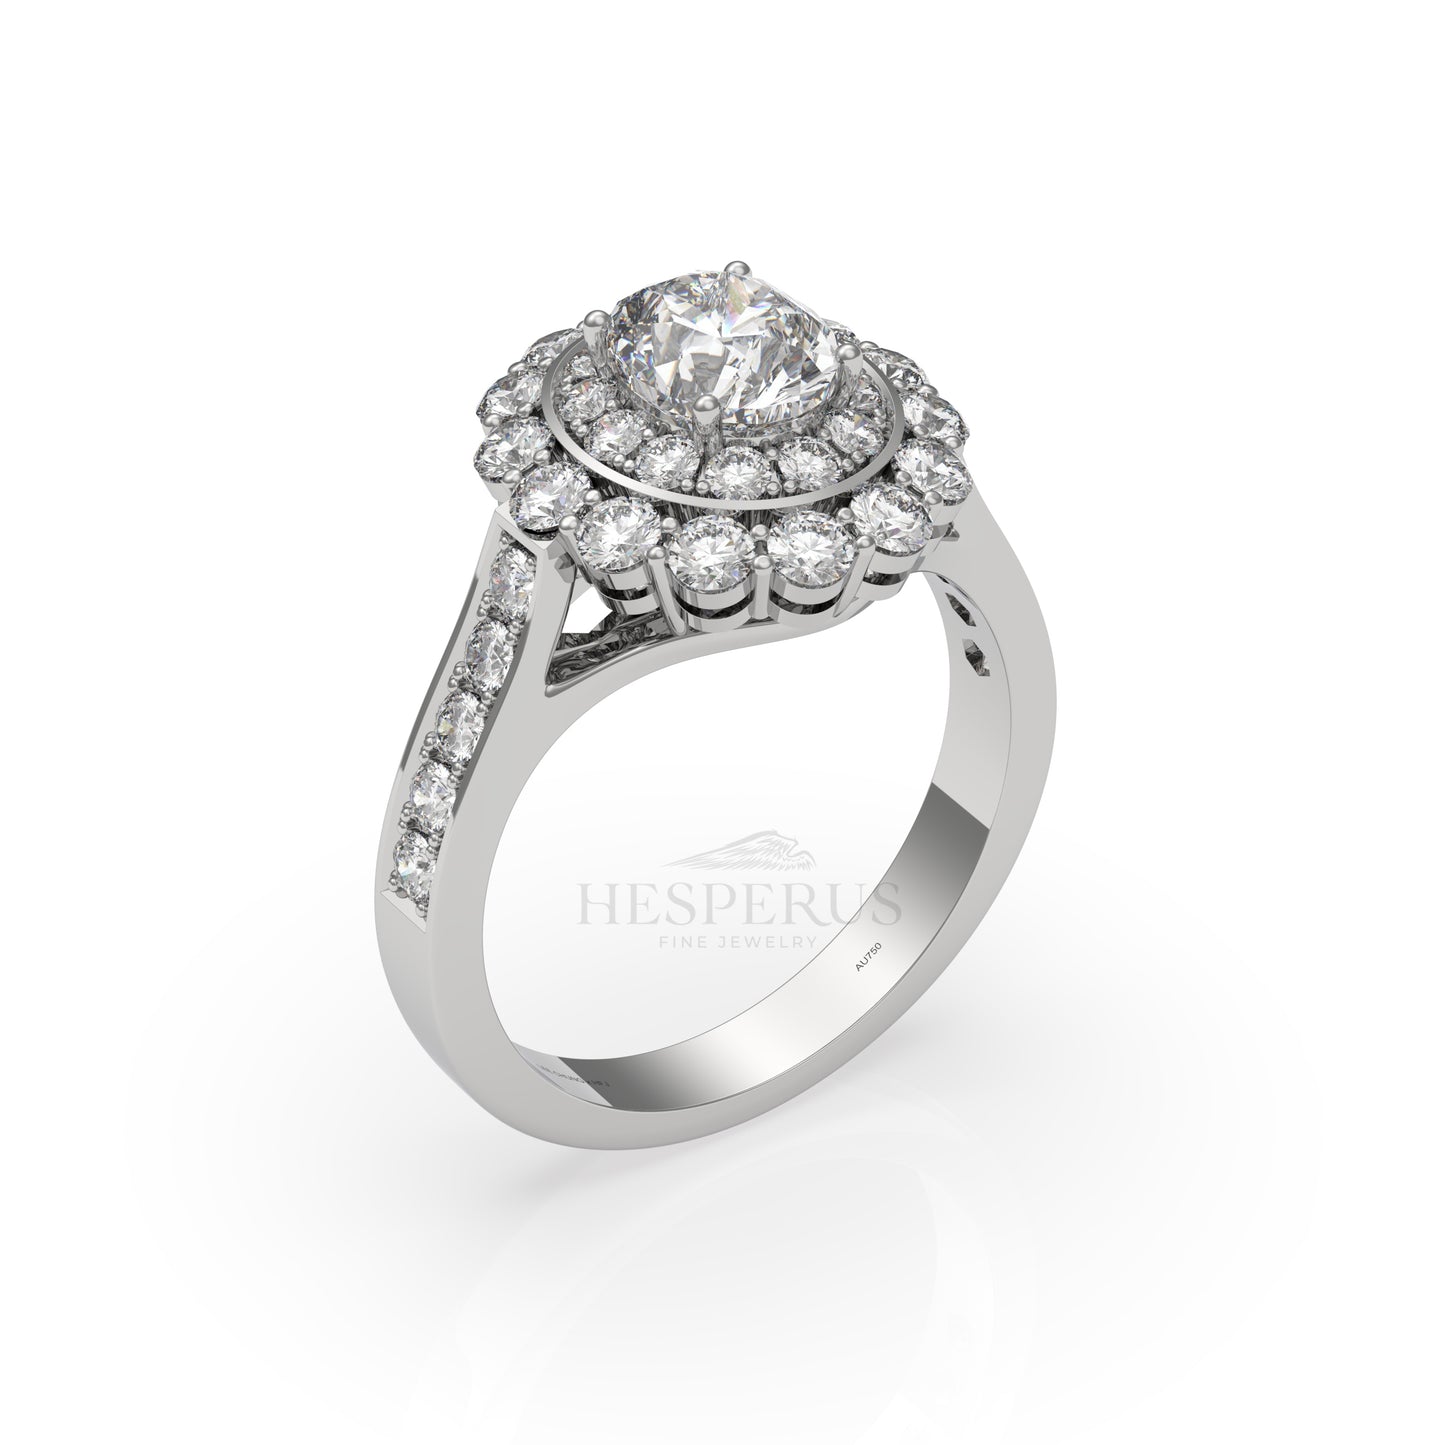 Double Halo Ring-Hesperus Fine Jewelry